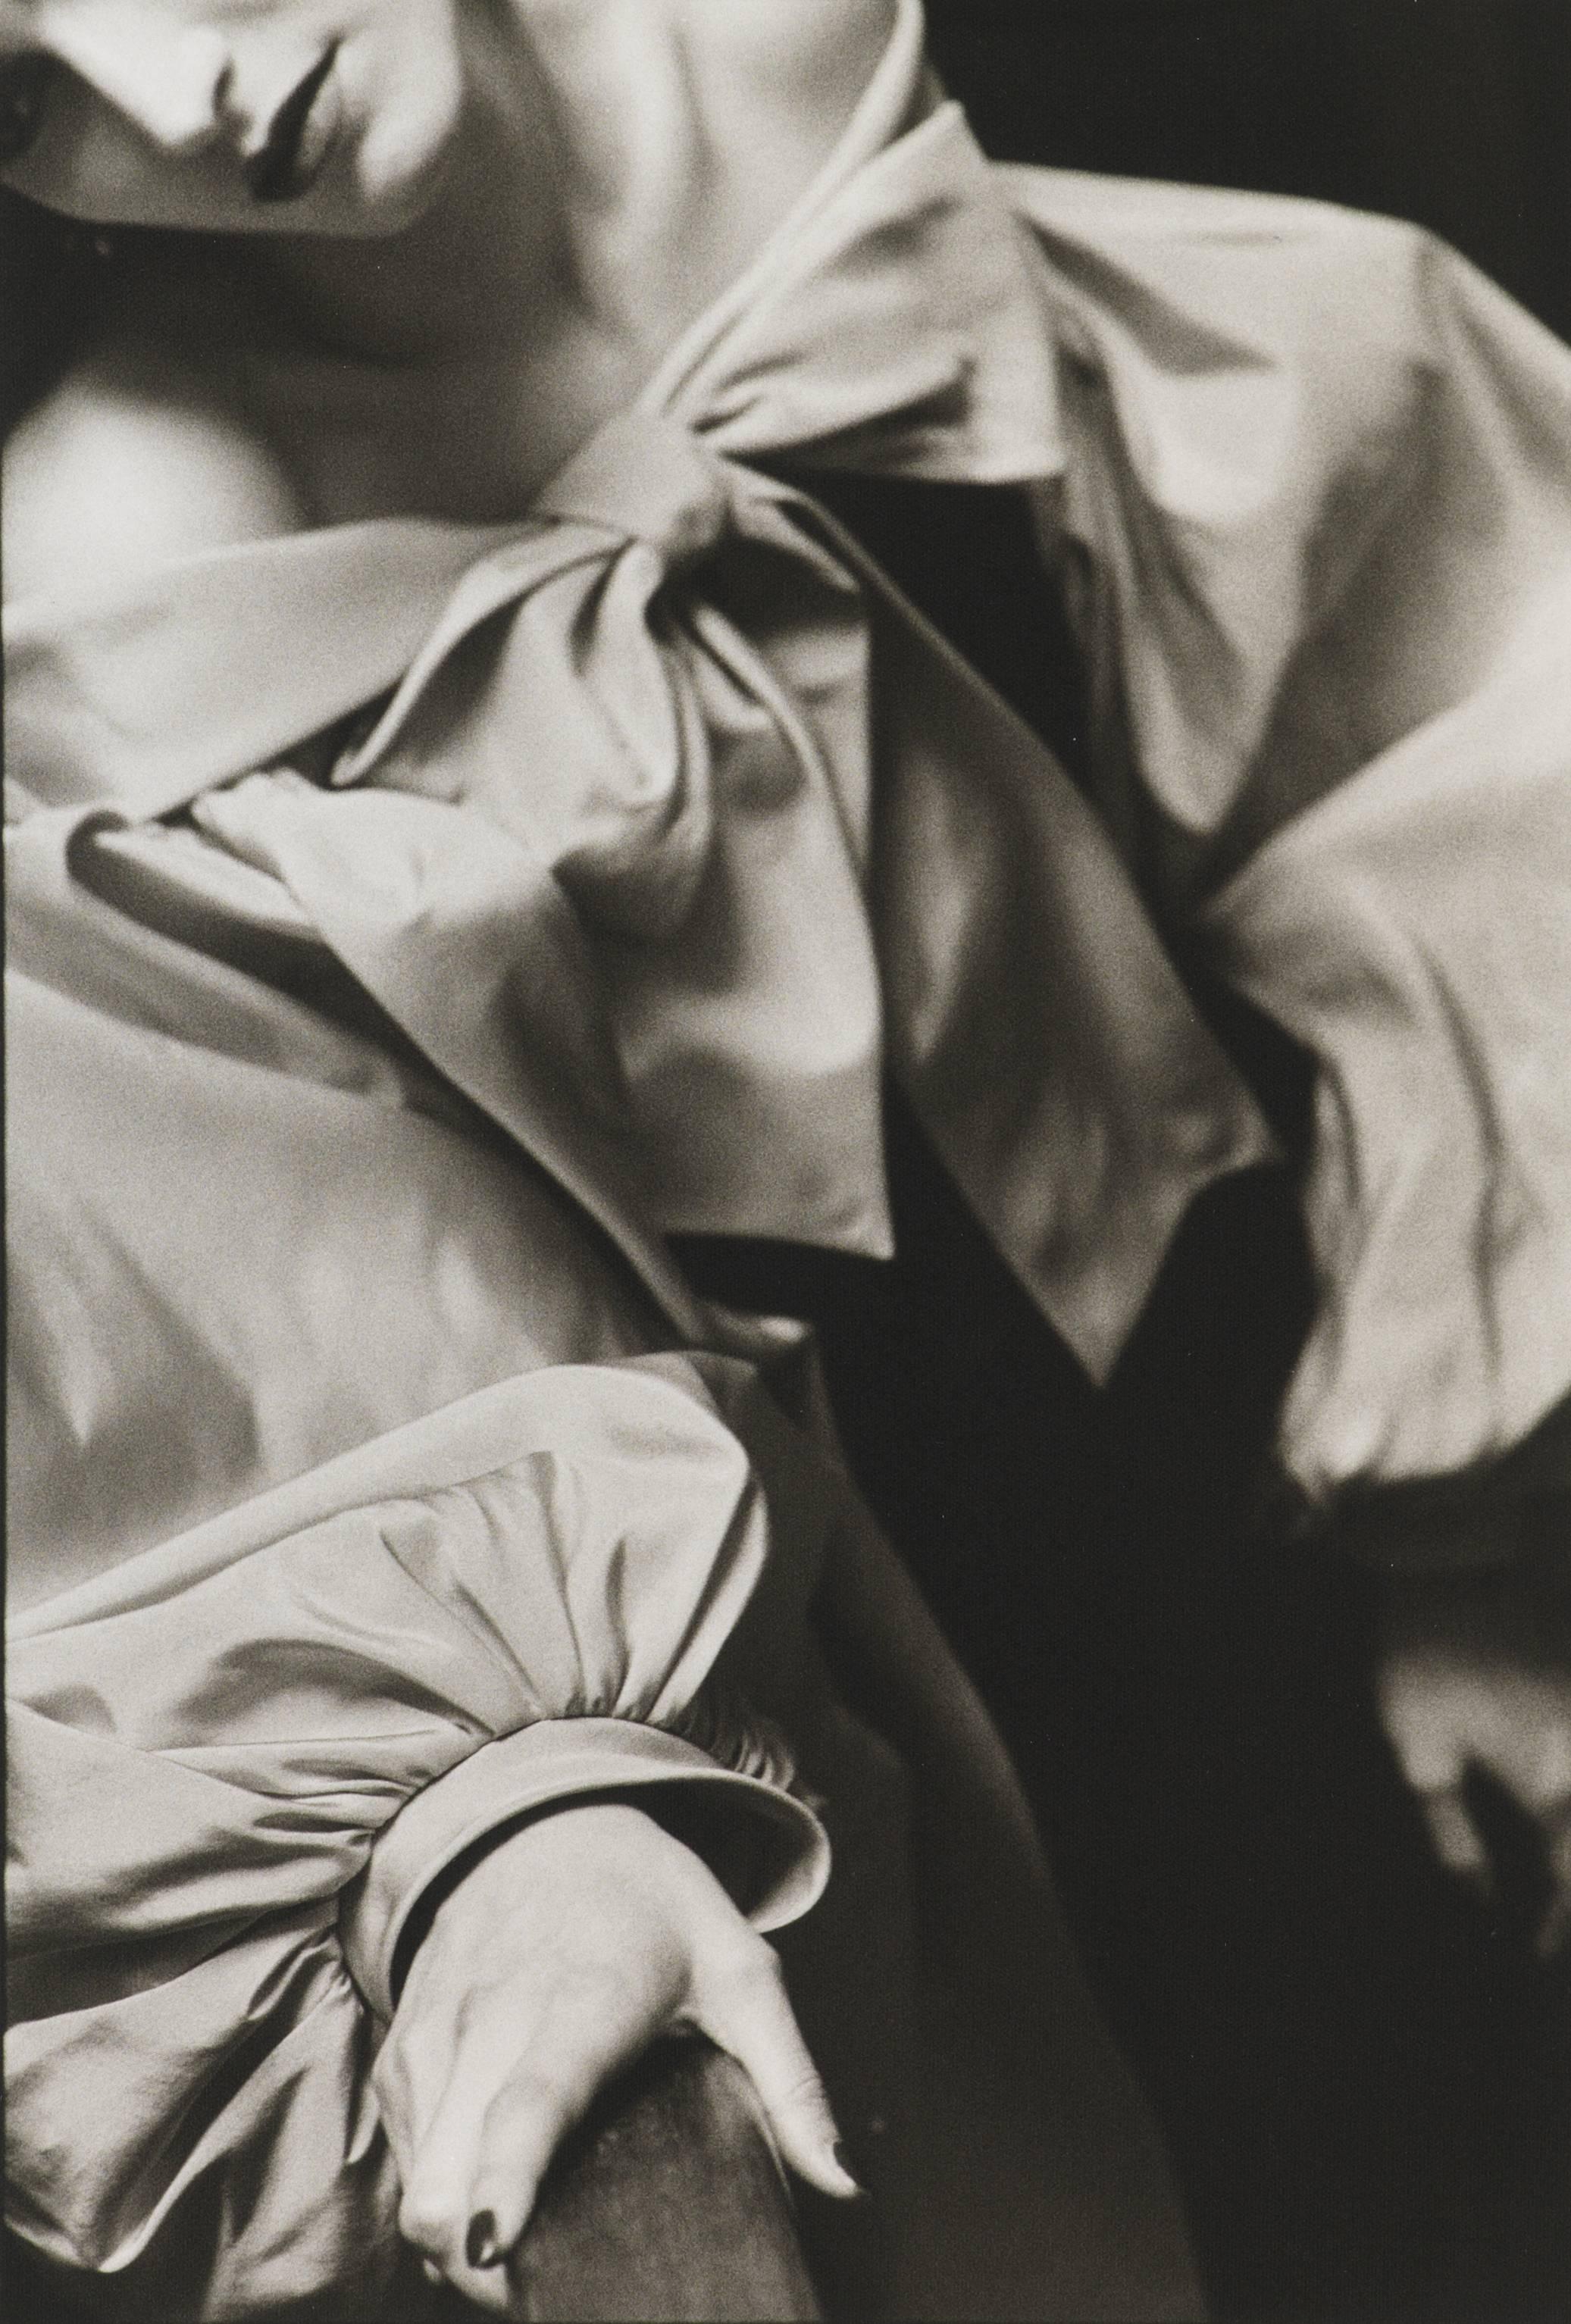 David Seidner Black and White Photograph - Anne Rohart in Yves Saint Laurent, 1983. Black & White Photography, Modern Print